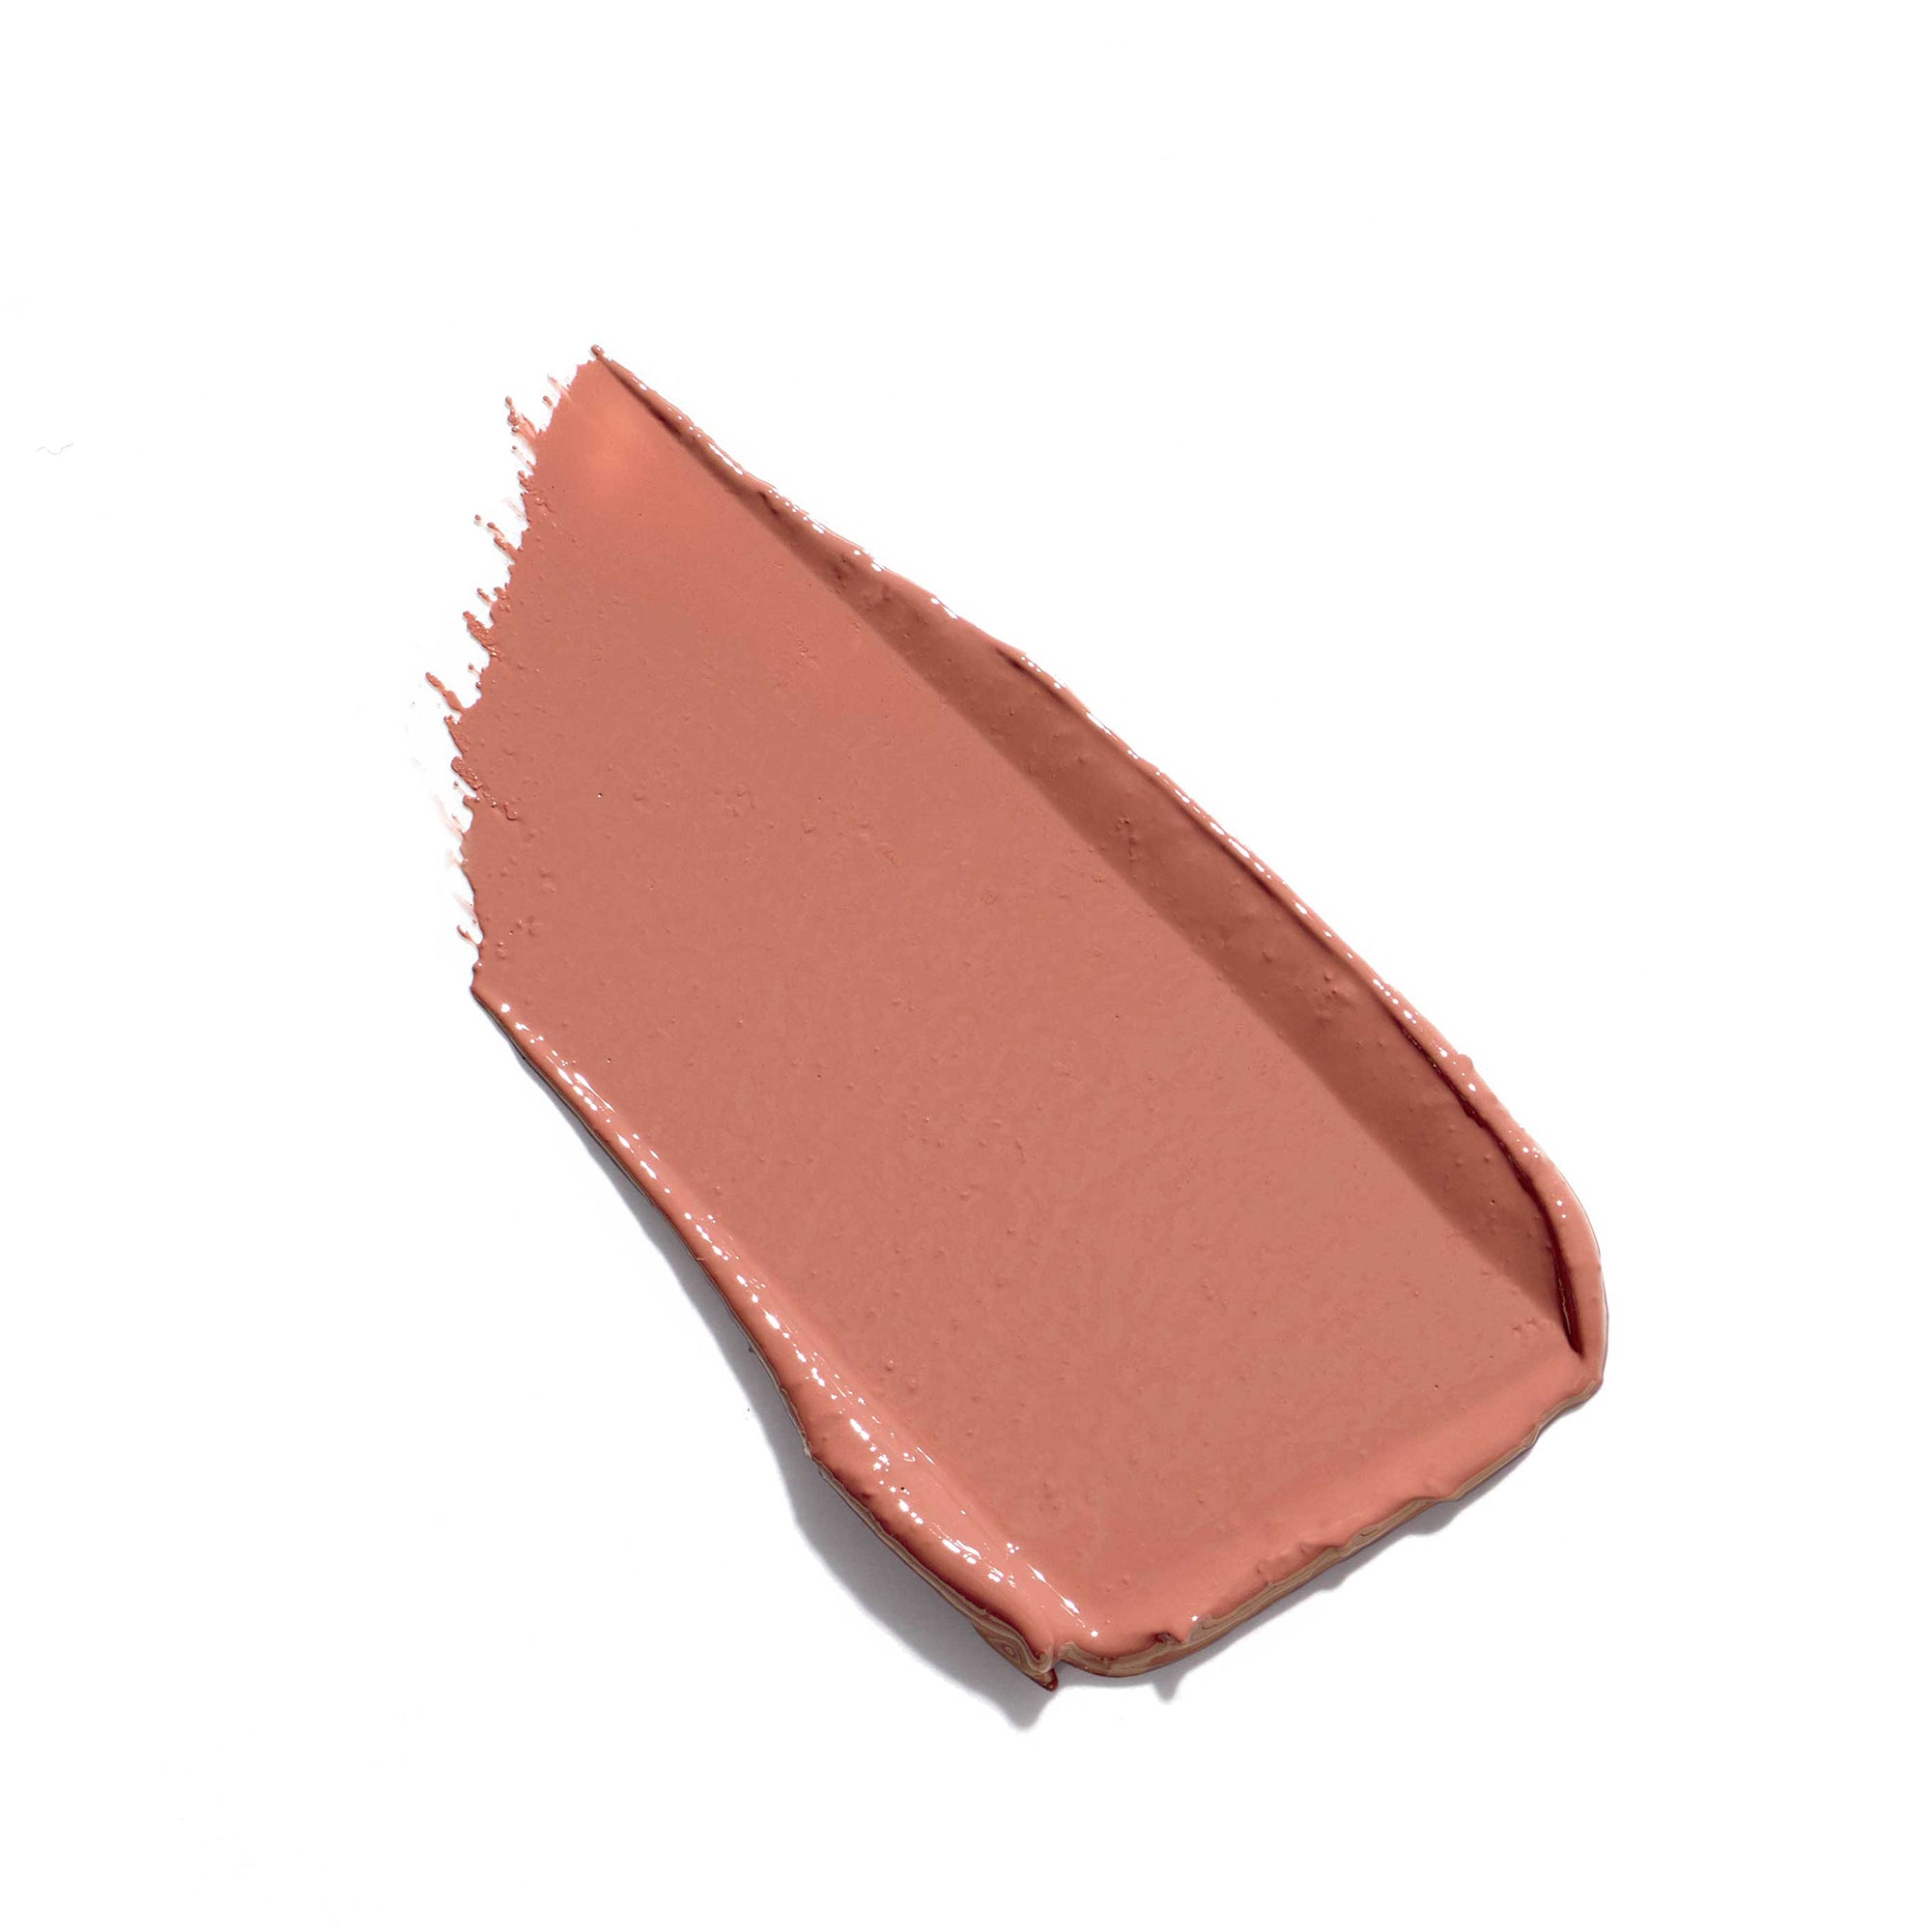 Jane Iredale ColorLuxe Hydrating Cream Lipstick / Bellini / Swatch